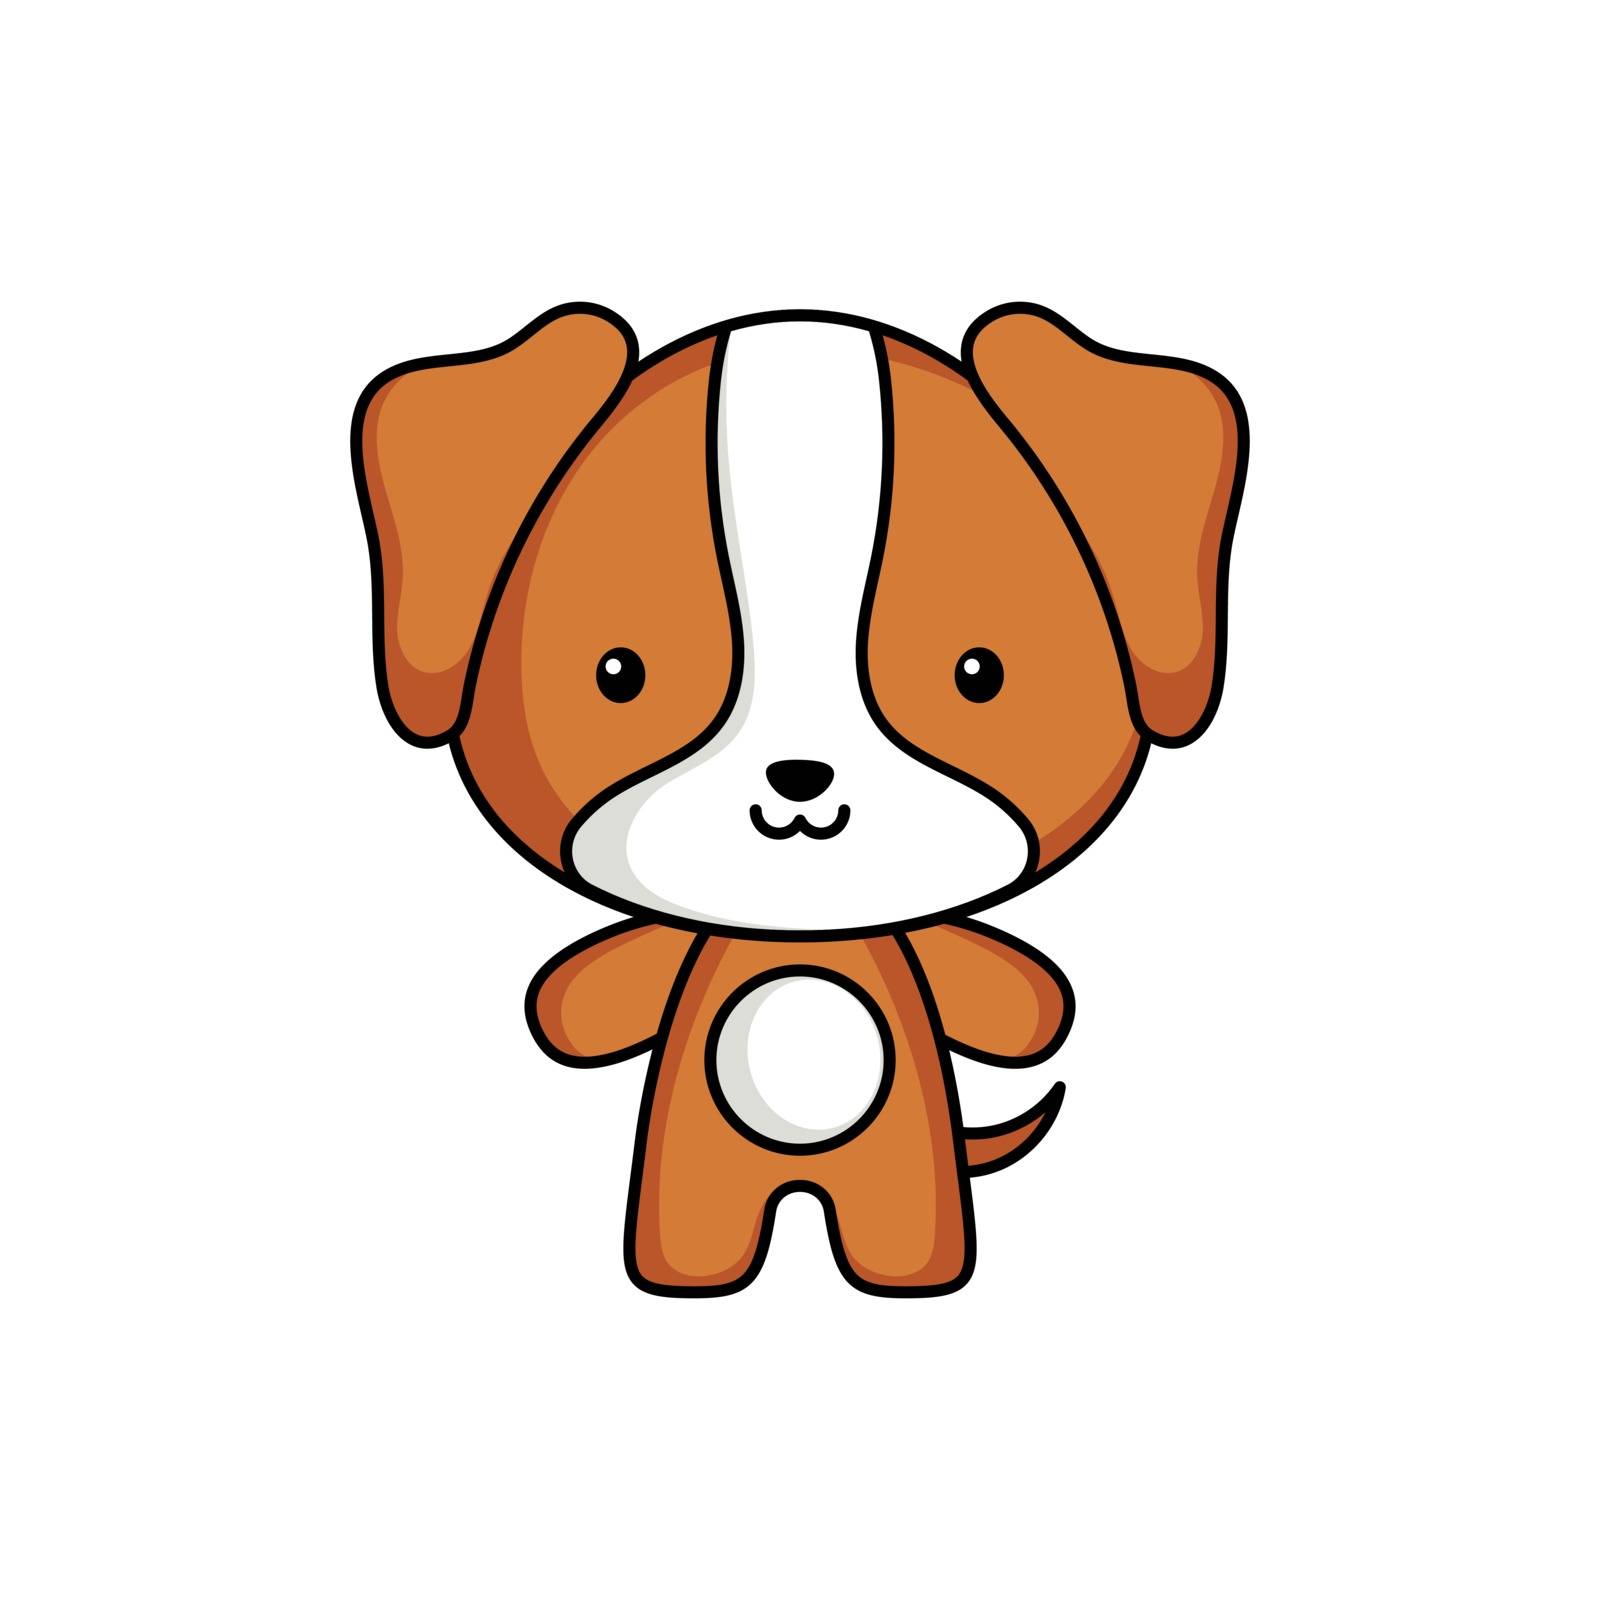 Cute cartoon dog logo template on white background. Mascot anima by Melnyk